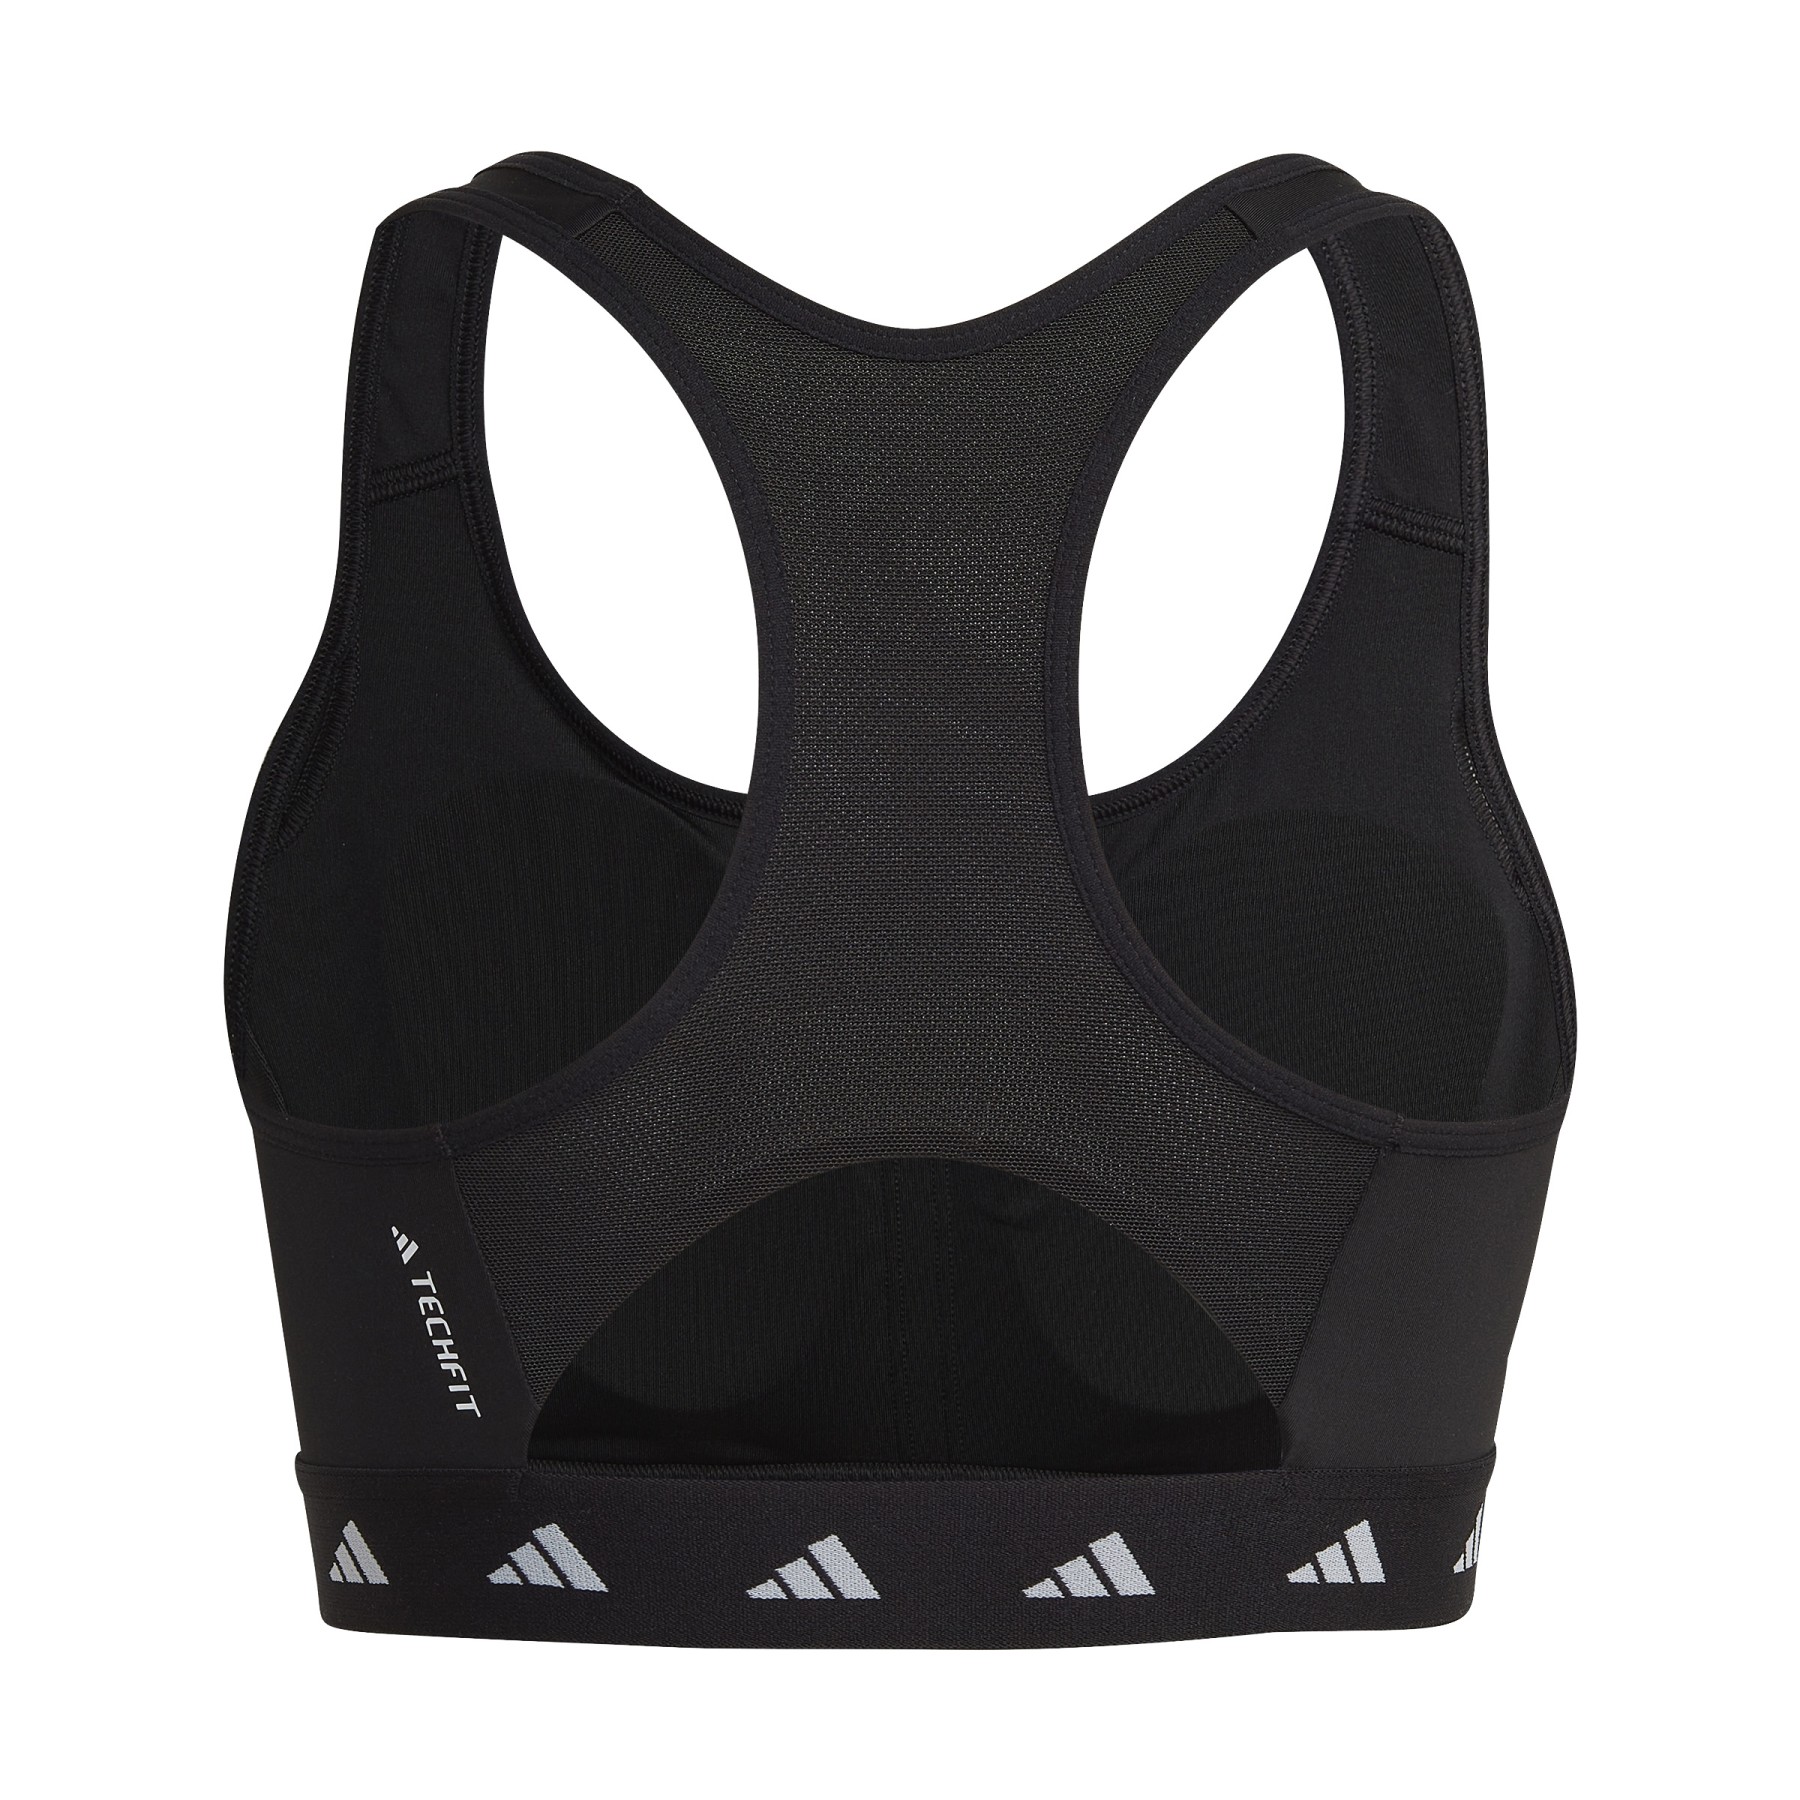 https://images.bike24.com/i/mb/f4/20/69/adidas-womens-terrex-power-mesh-bra-top-black-hn7273-2-1232823.jpg